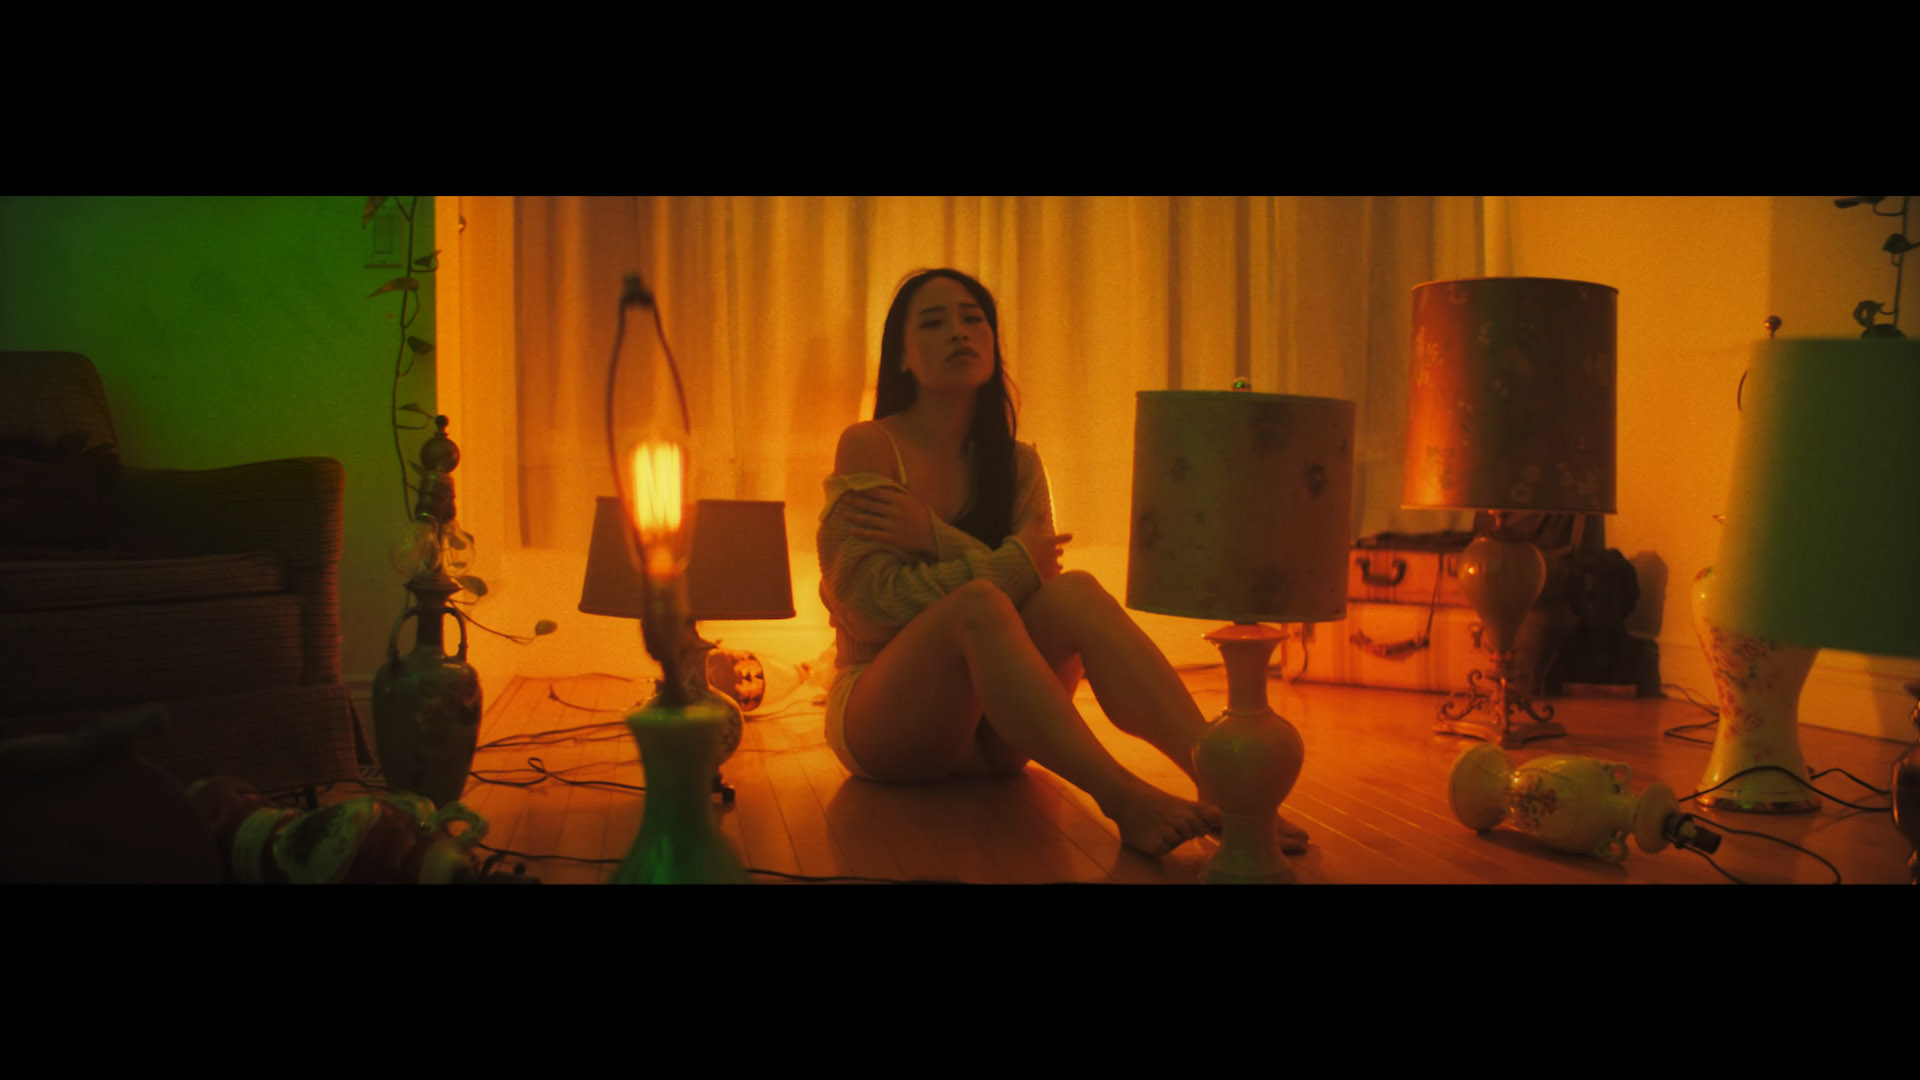 Chynna Lewis' “Where I Left You” music video lighting using ENTTEC D-Splits.